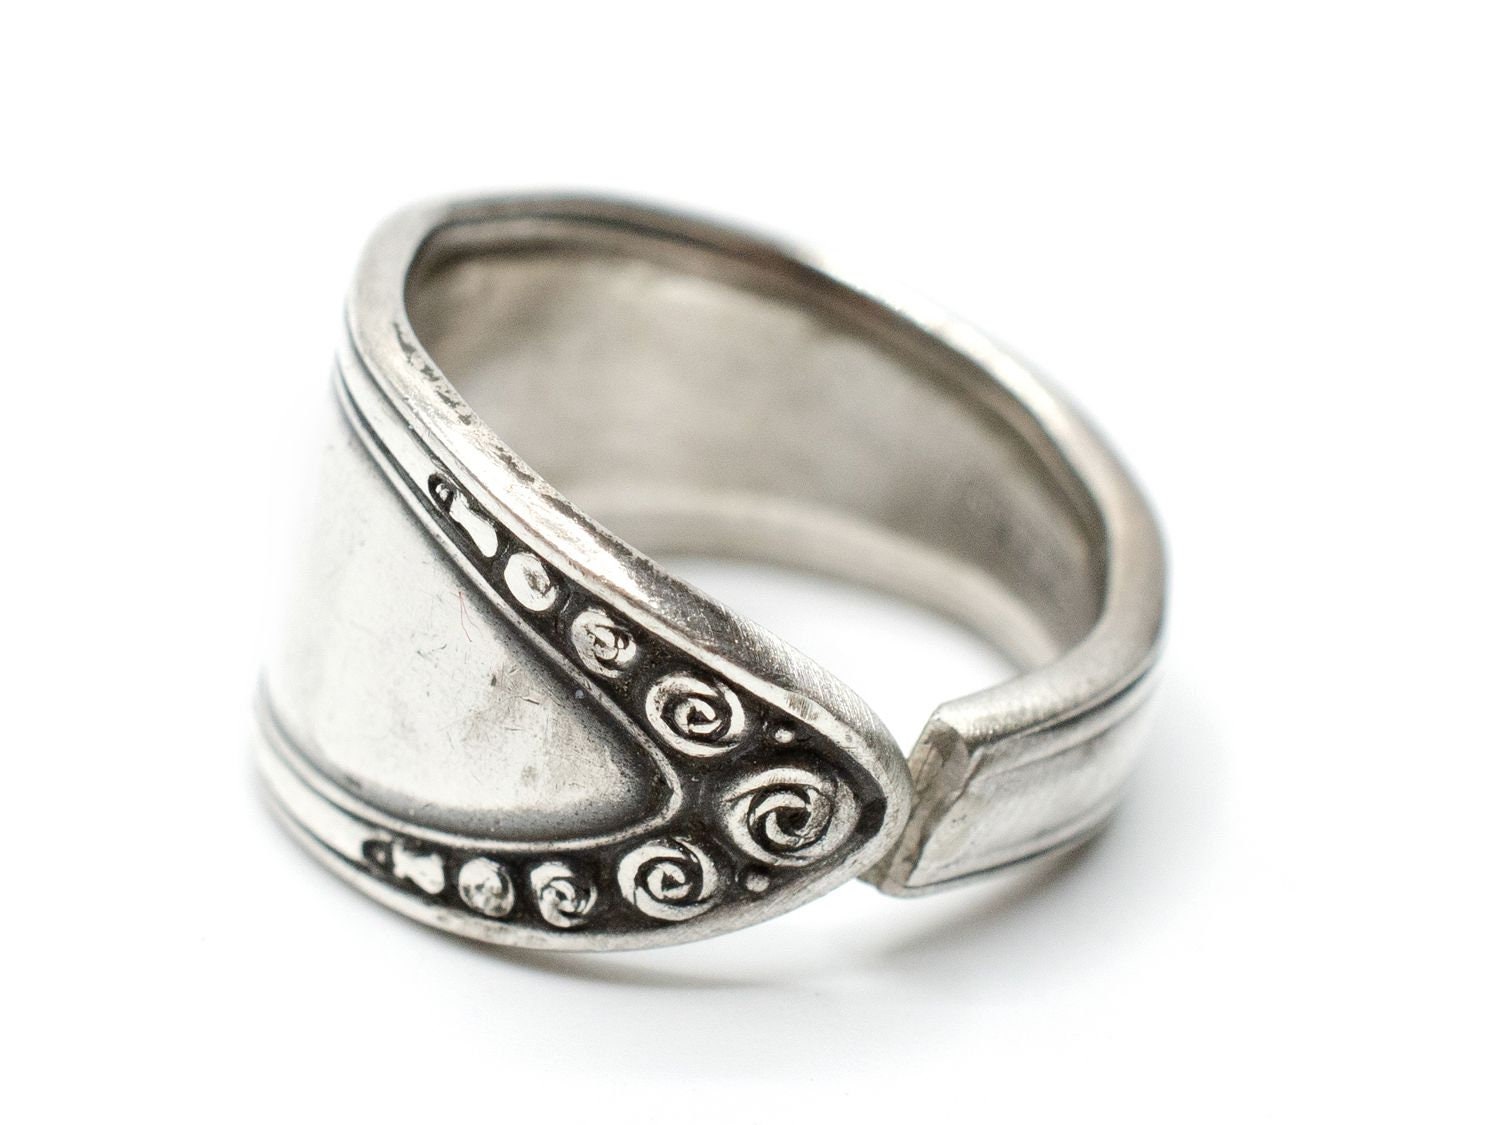 Unikat Ring Aus Antiken Löffel Gabel Hergestellt Miniblings Antik Upcycling Y6 von Miniblings